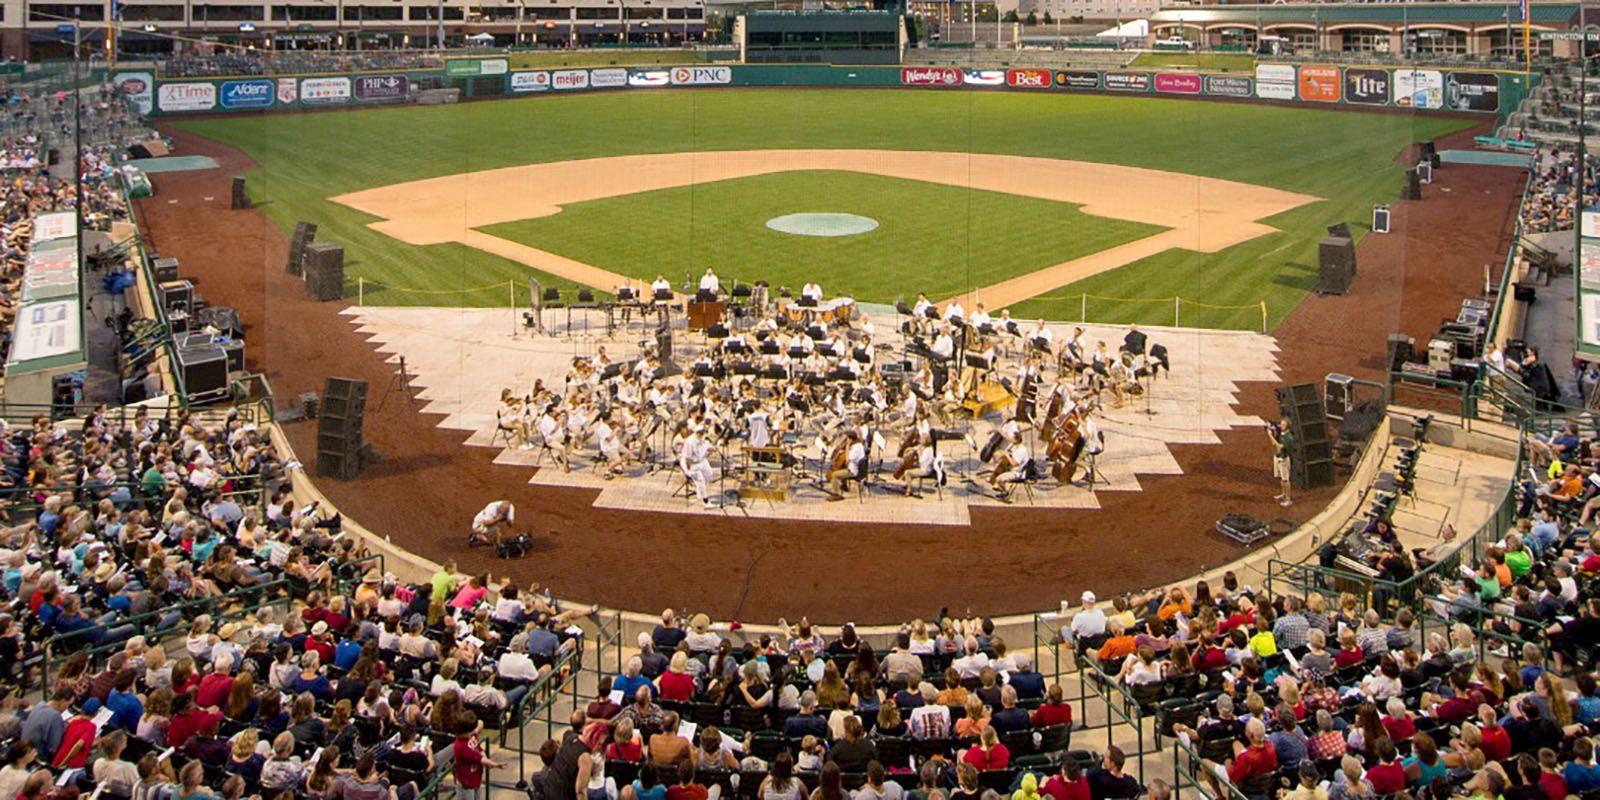 The Fort Wayne Philharmonic's Patriotic Pops concerts return beginning June 25 in Syracuse.